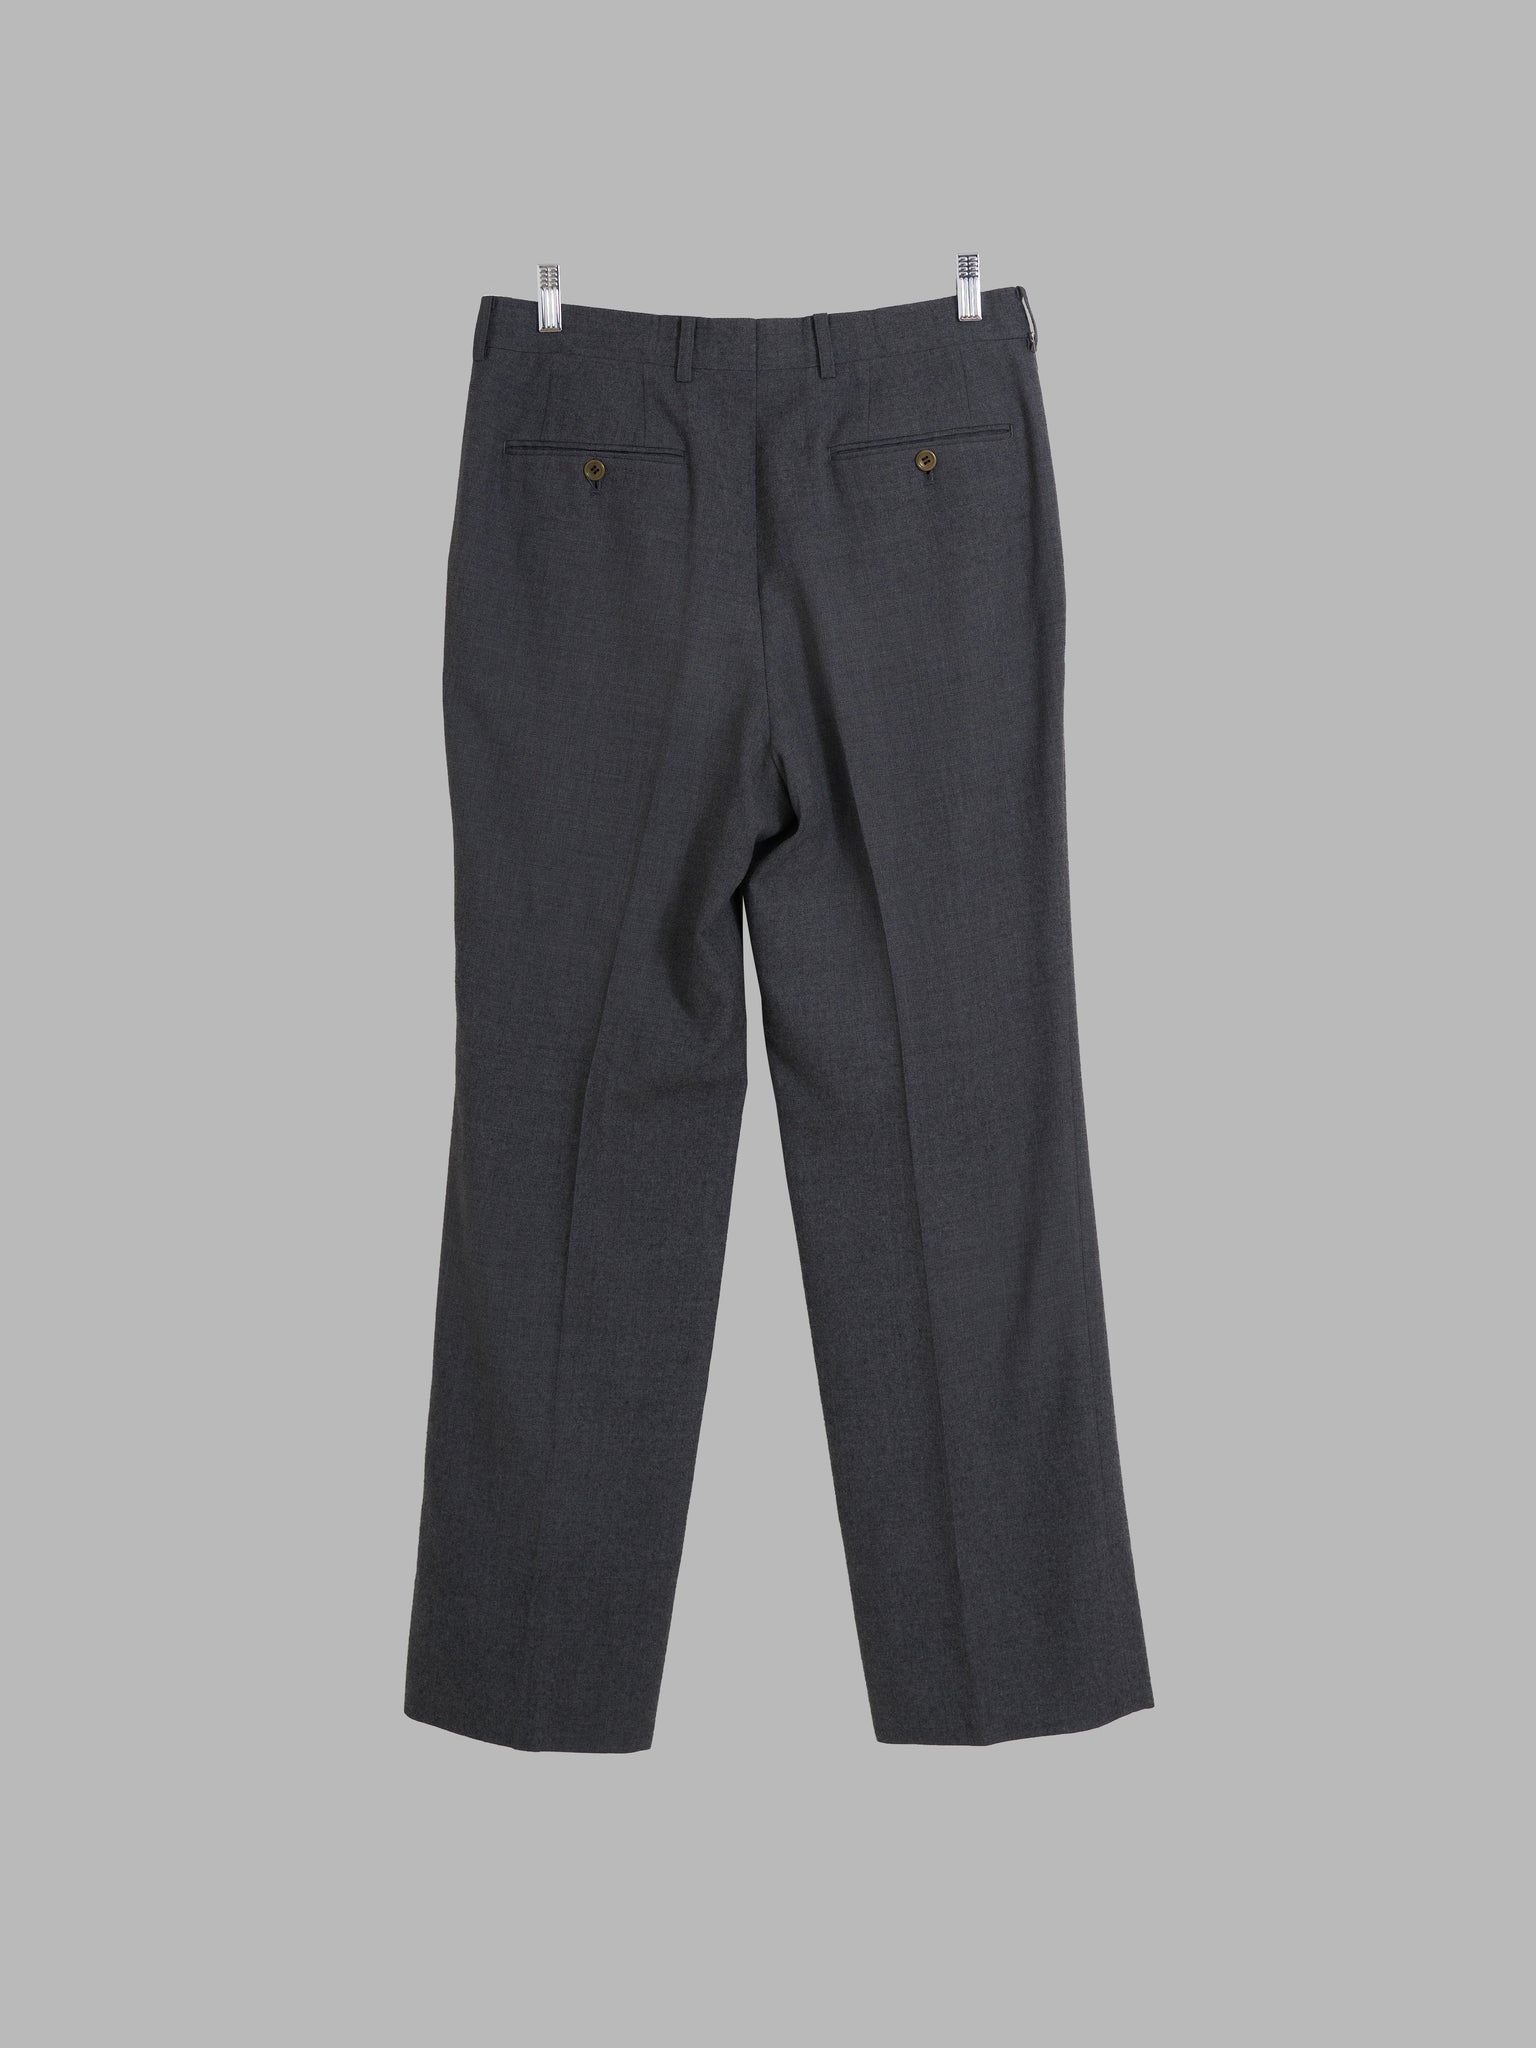 Kenzo Homme 1990s grey wool single tuck trousers - size 3 M S